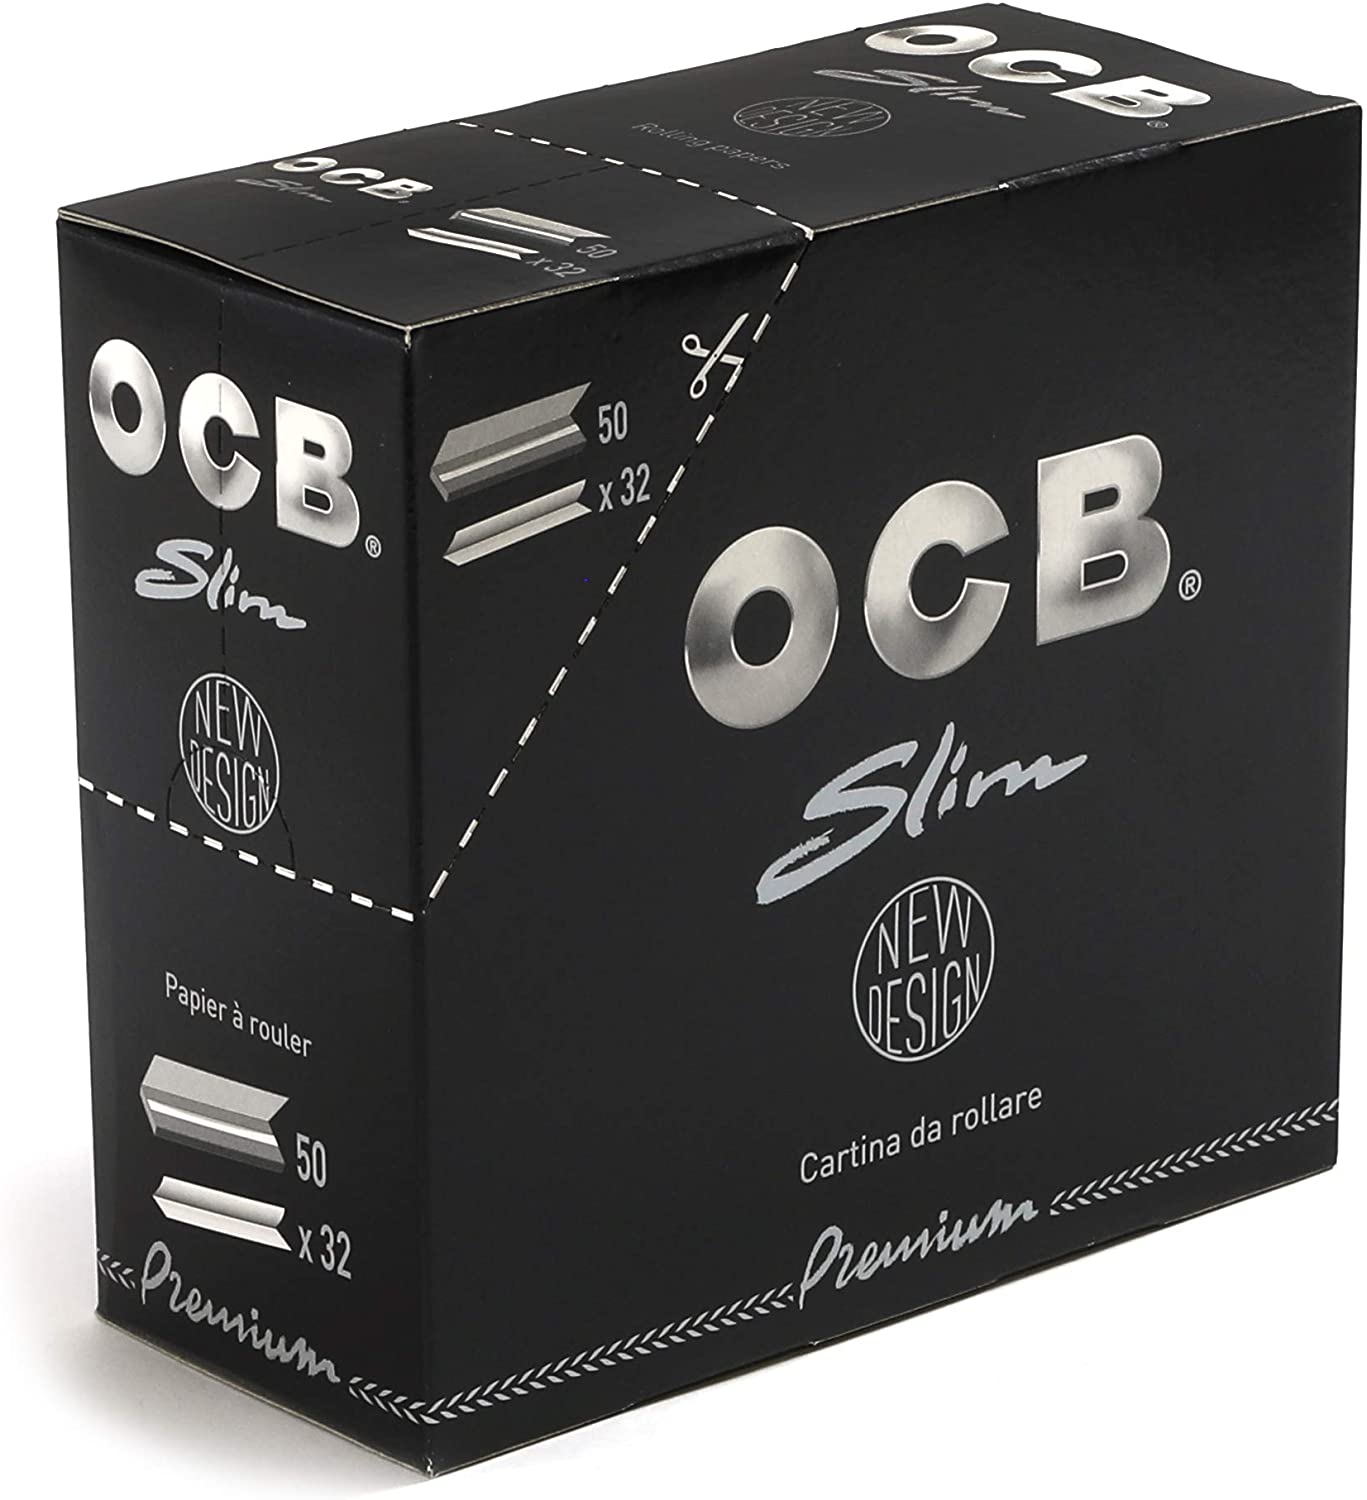 OCB Premium Slim King Size  50 x 32 Blatt Long Paper NEU schwarz lang 